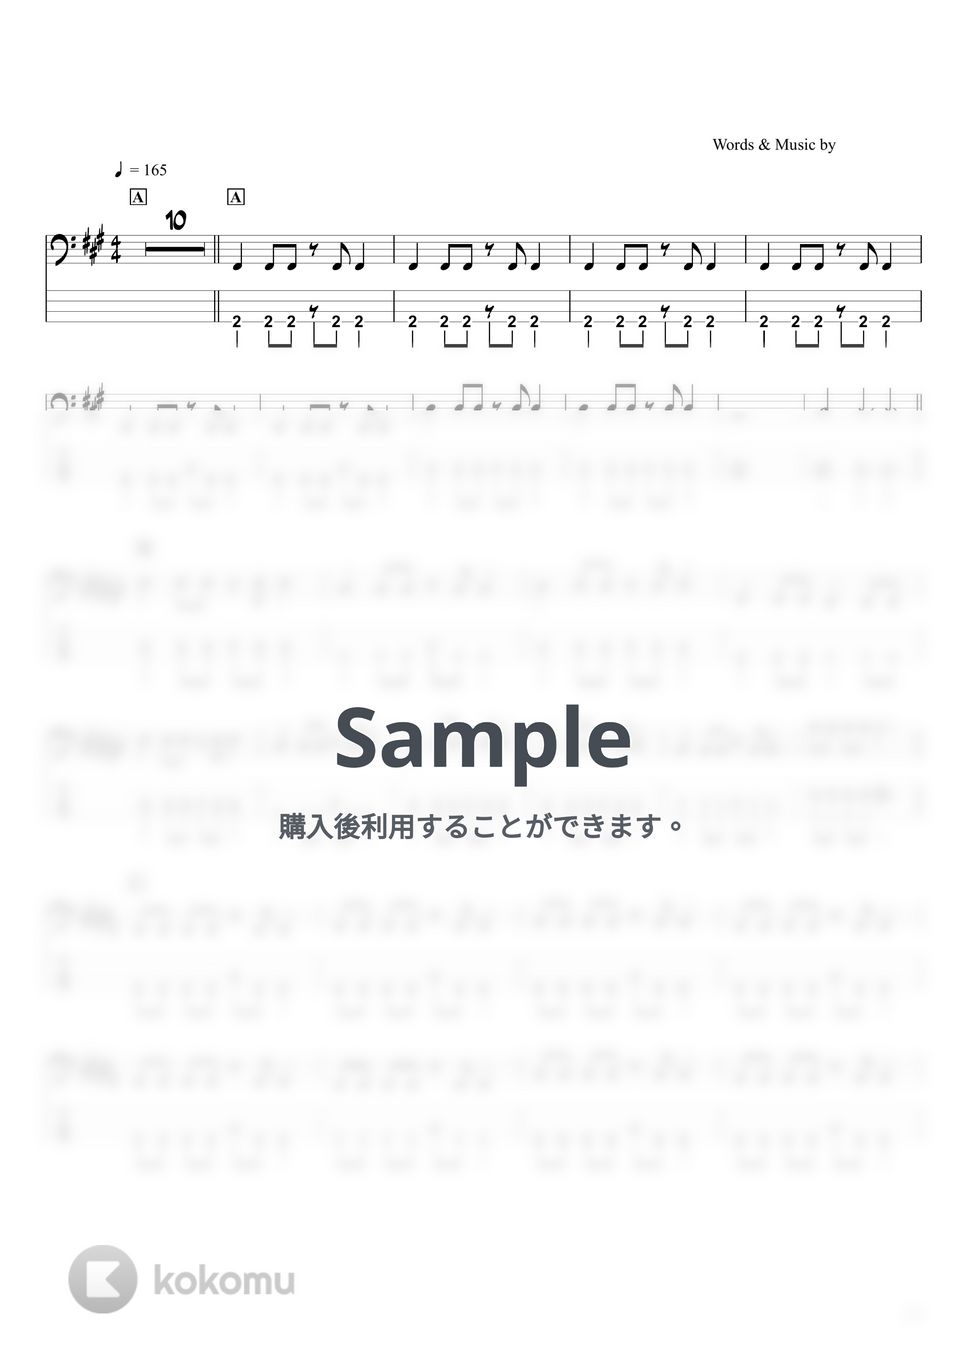 Aimer - 朝が来る (ベースTAB譜☆4弦ベース対応) by swbass